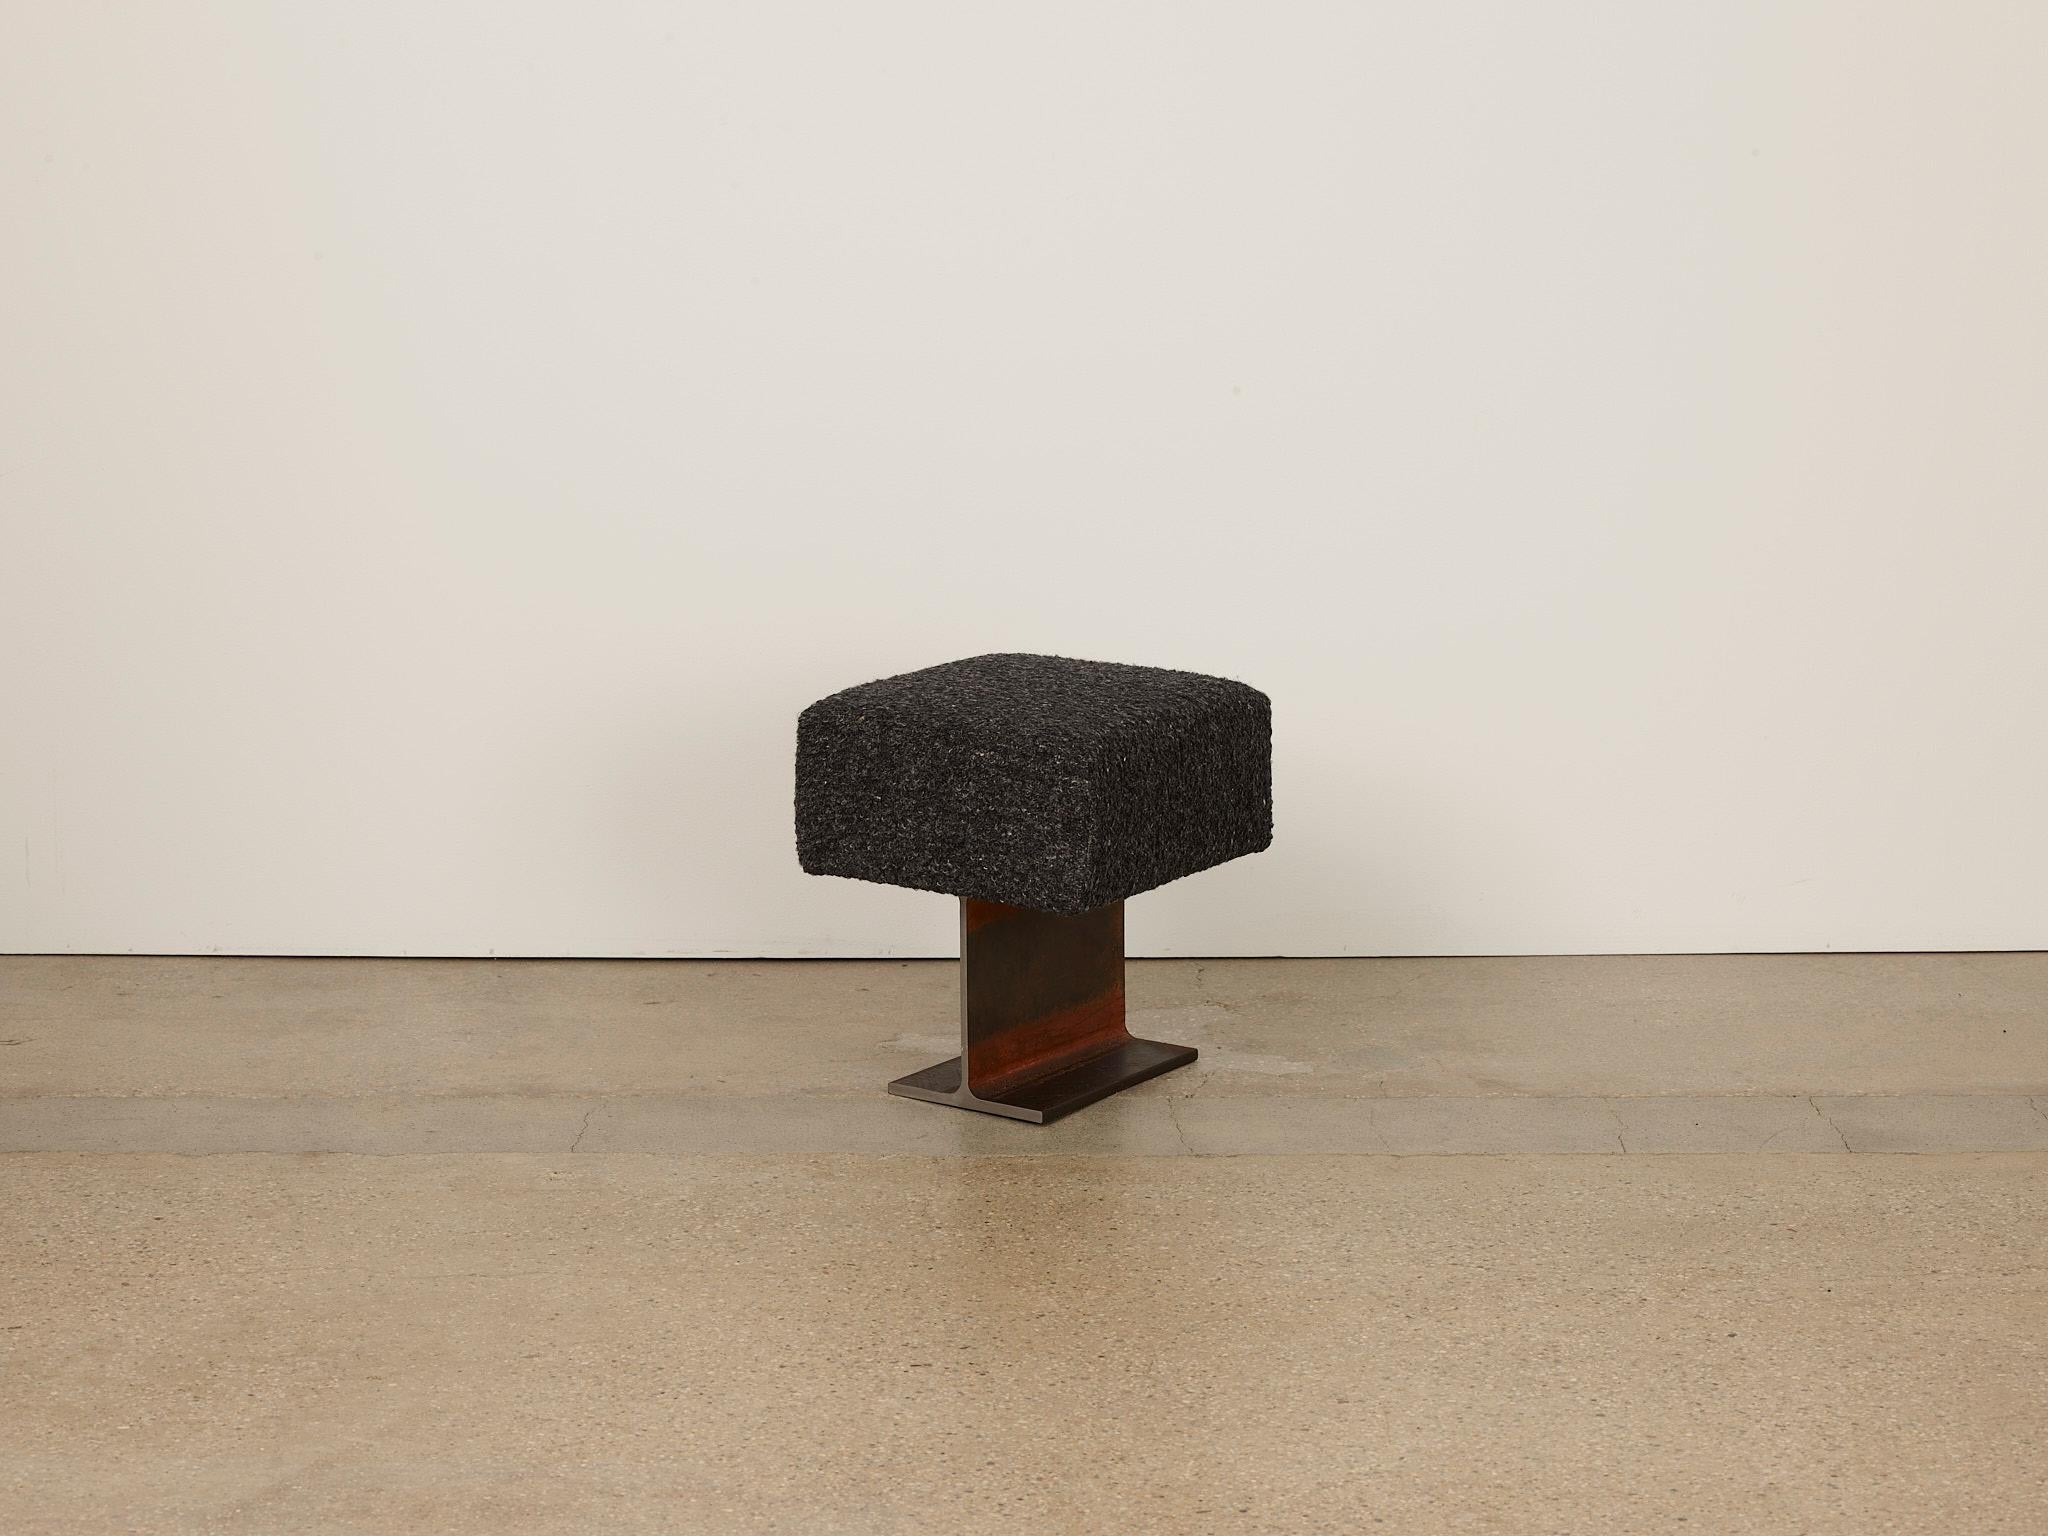 Trono block black chair by Umberto Bellardi Ricci
Dimensions: D 14.5